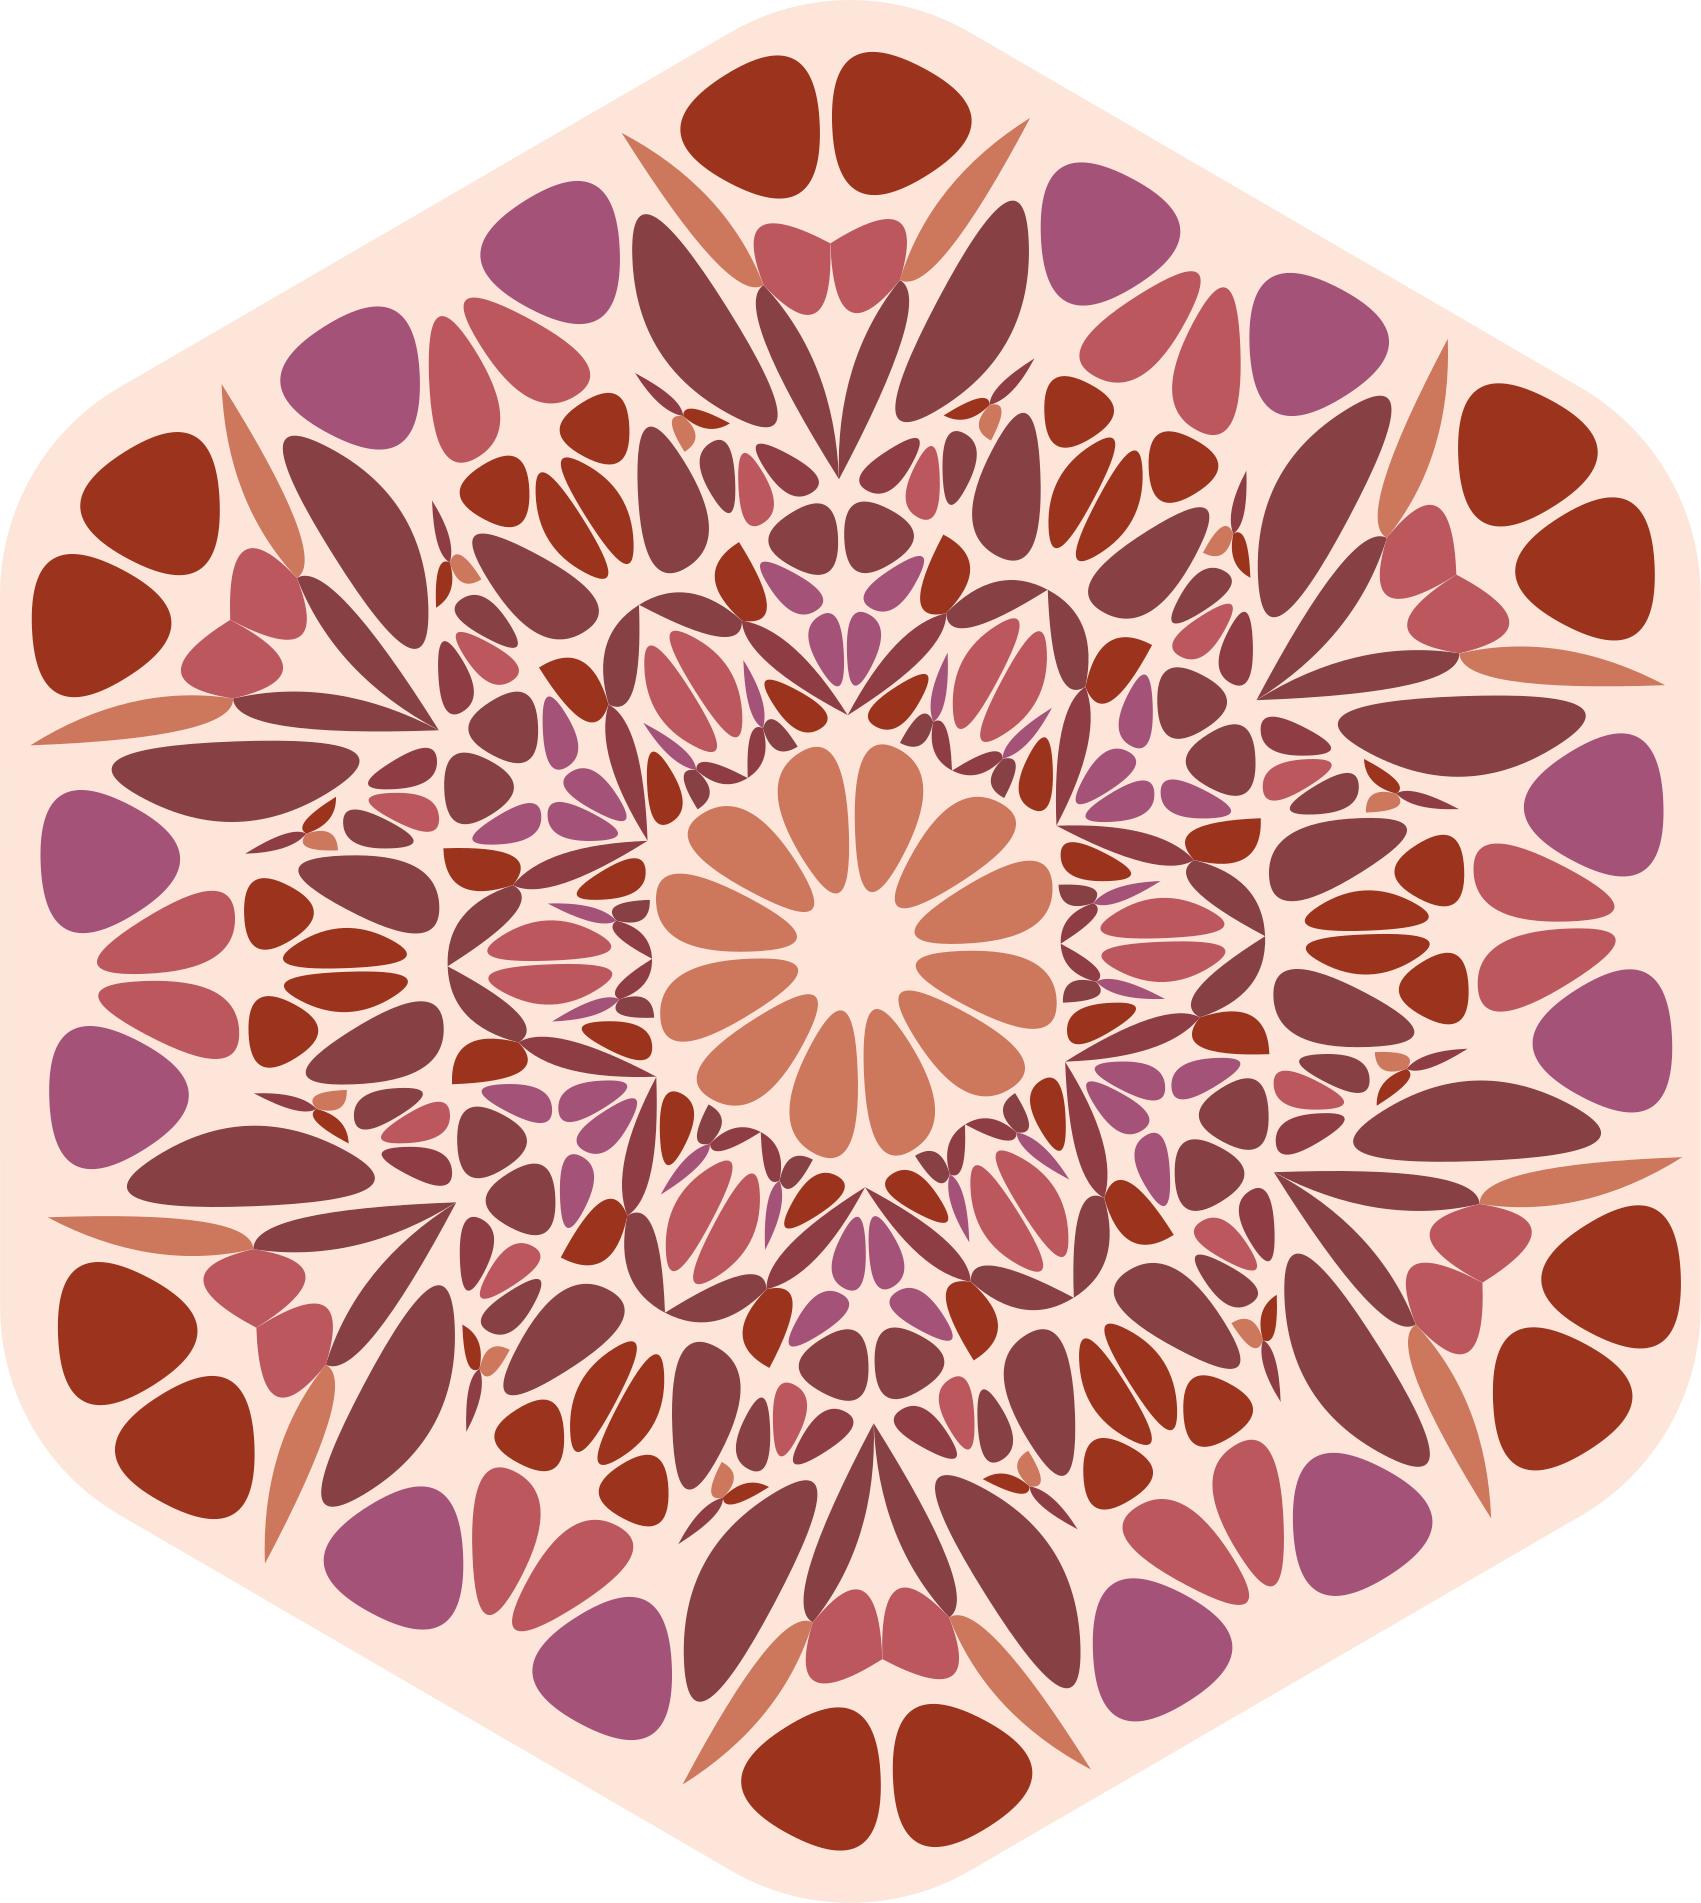 Vinilo pared Mandala geométrica - TenVinilo